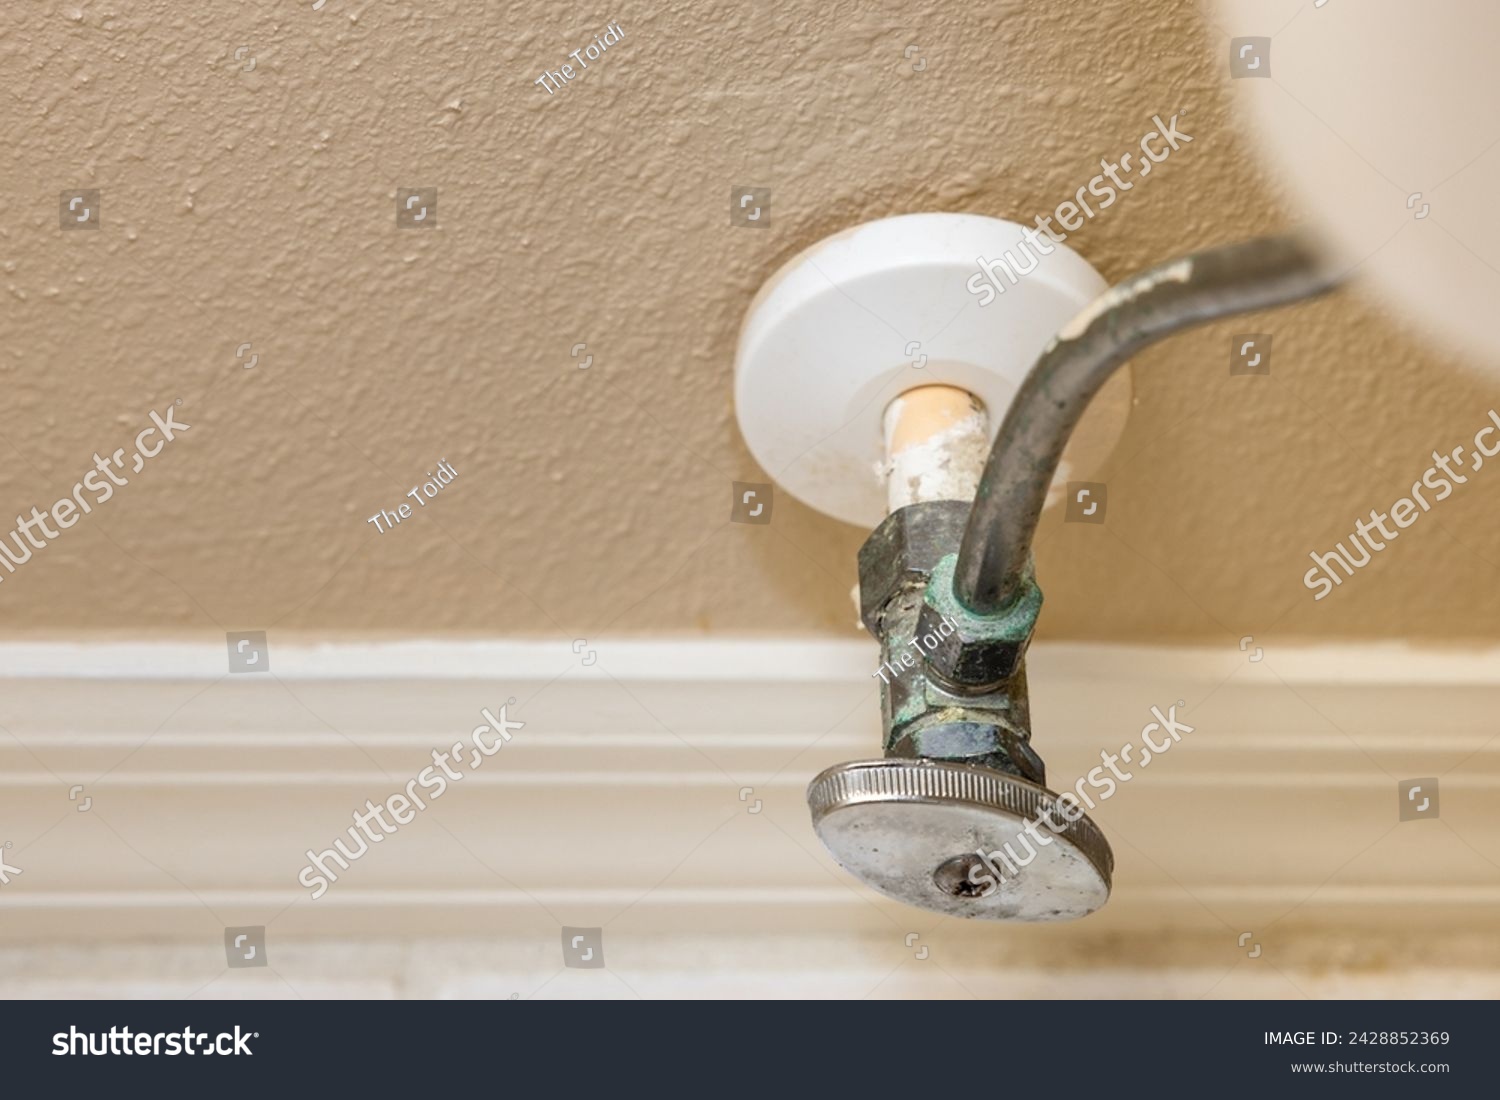 Residential home bathroom toilet water shut off valve. Replacing old leaking restroom wall supply line valve plumbing. #2428852369